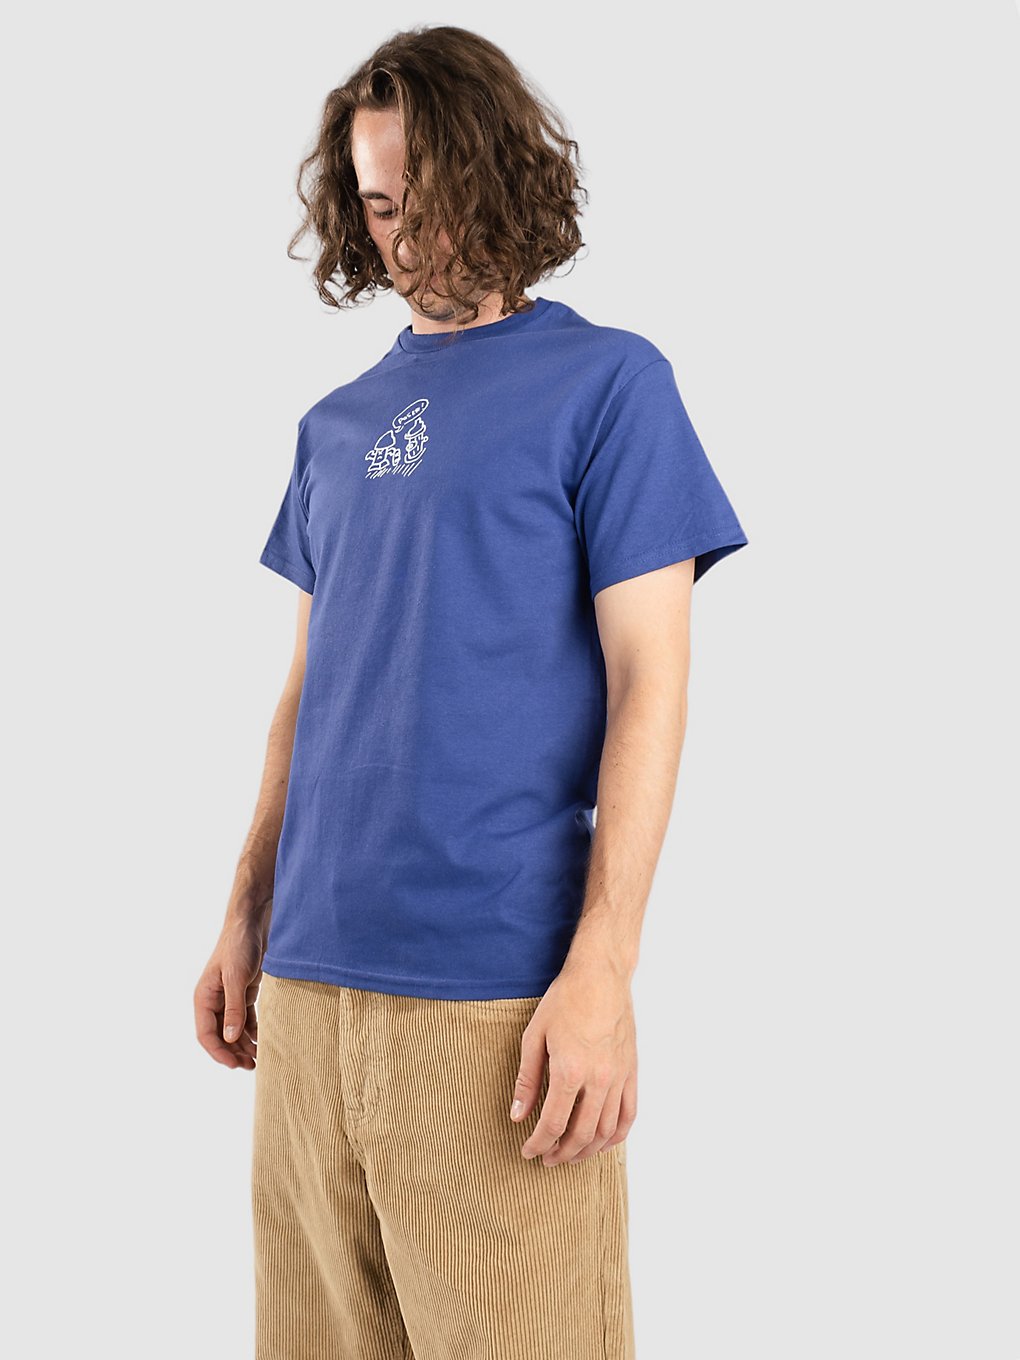 Image of A.Lab Poser >:( T-Shirt blu